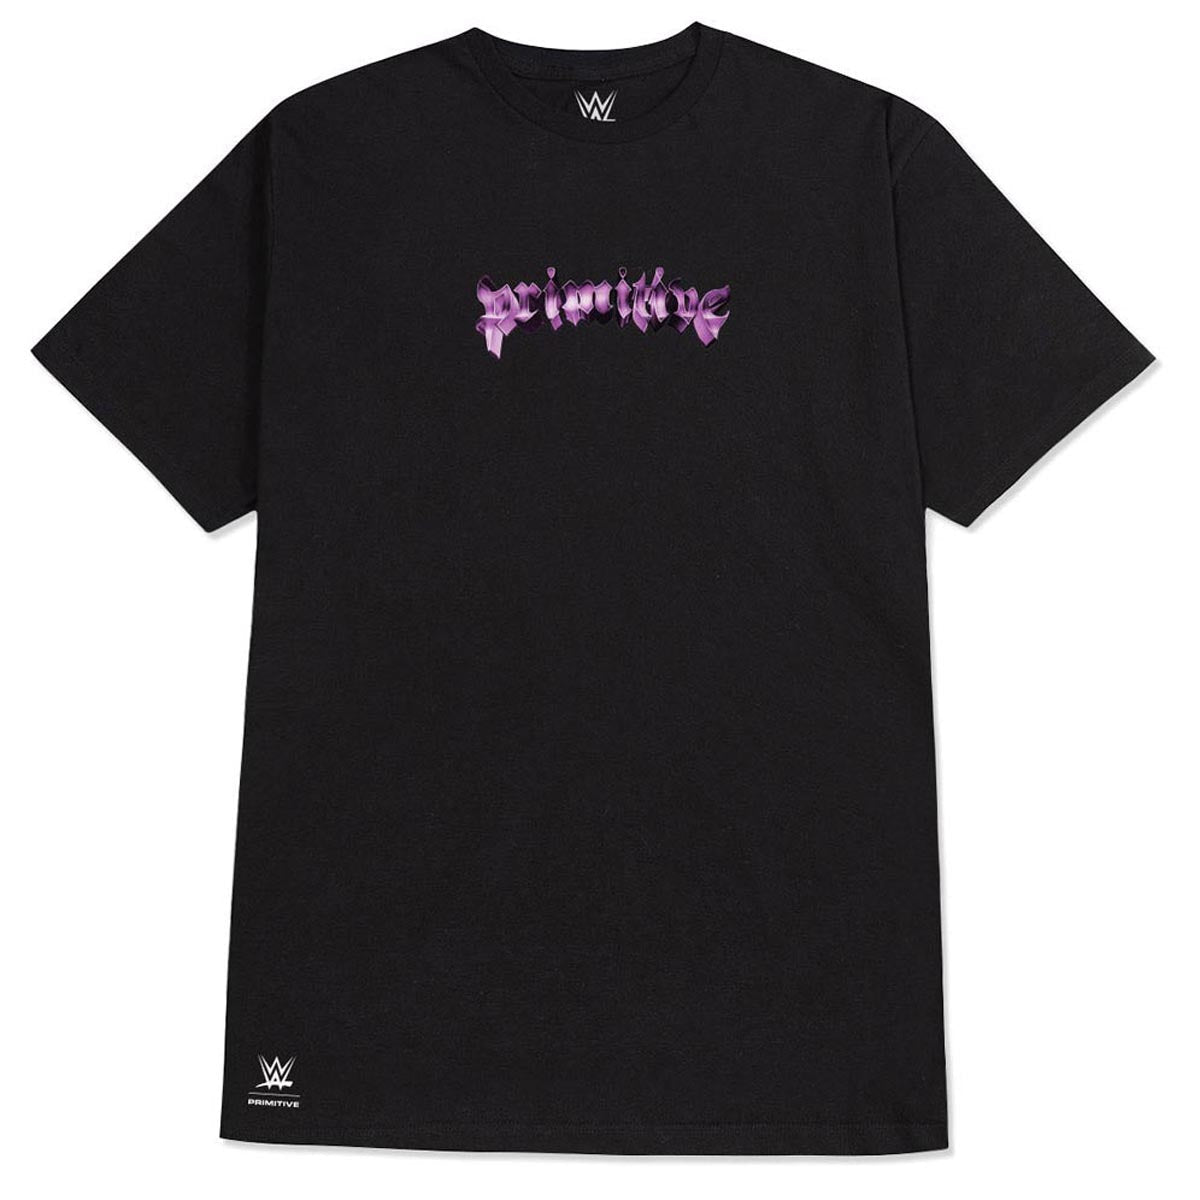 Primitive x WWE Deadman Forever T-Shirt - Black image 2